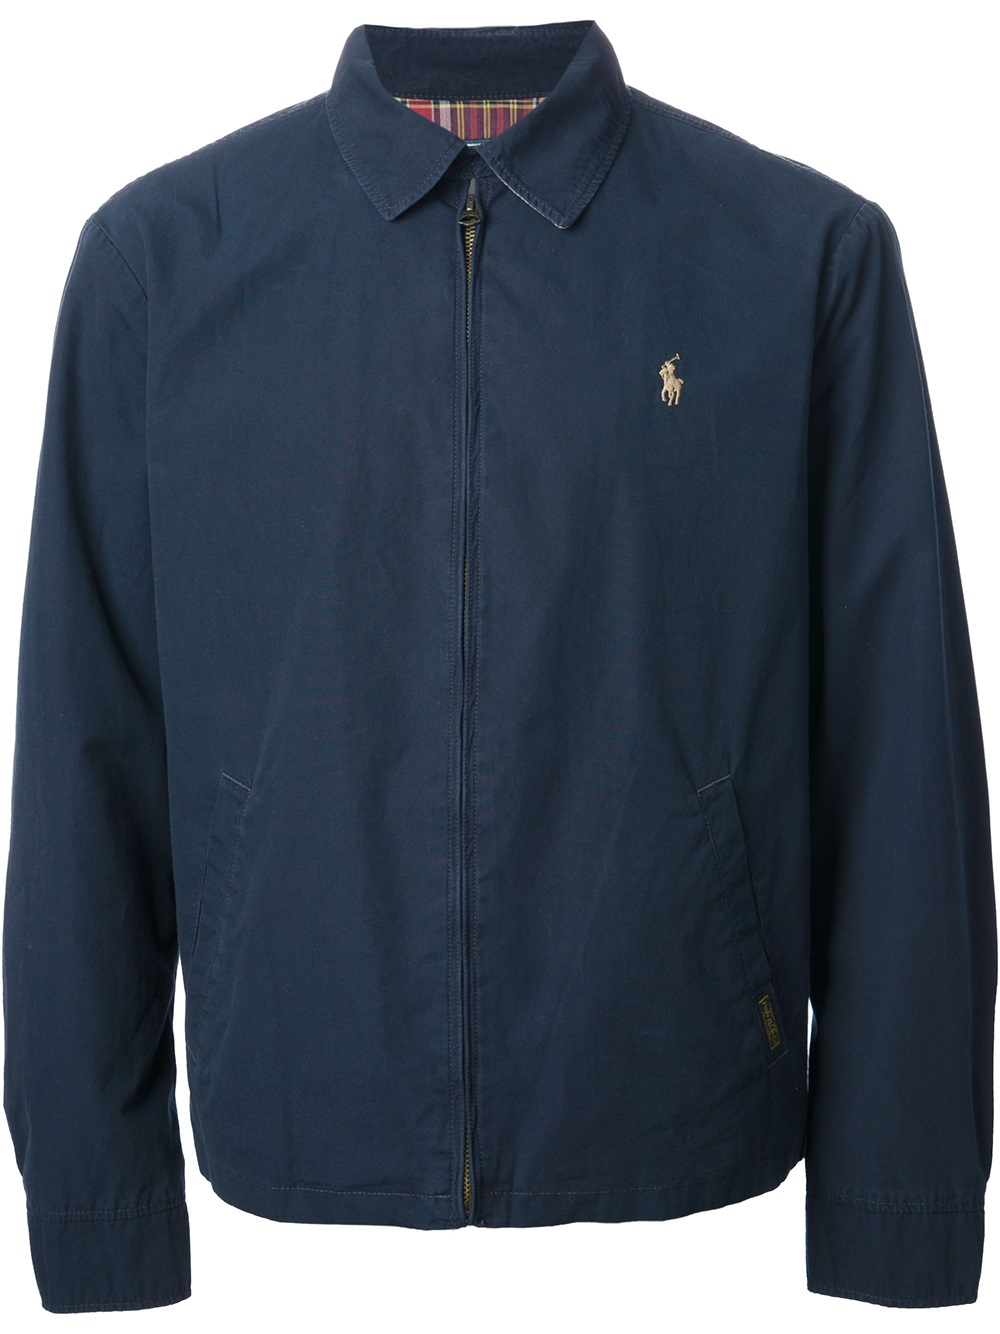 Lyst - Polo Ralph Lauren Classic Harrington Jacket in Blue for Men